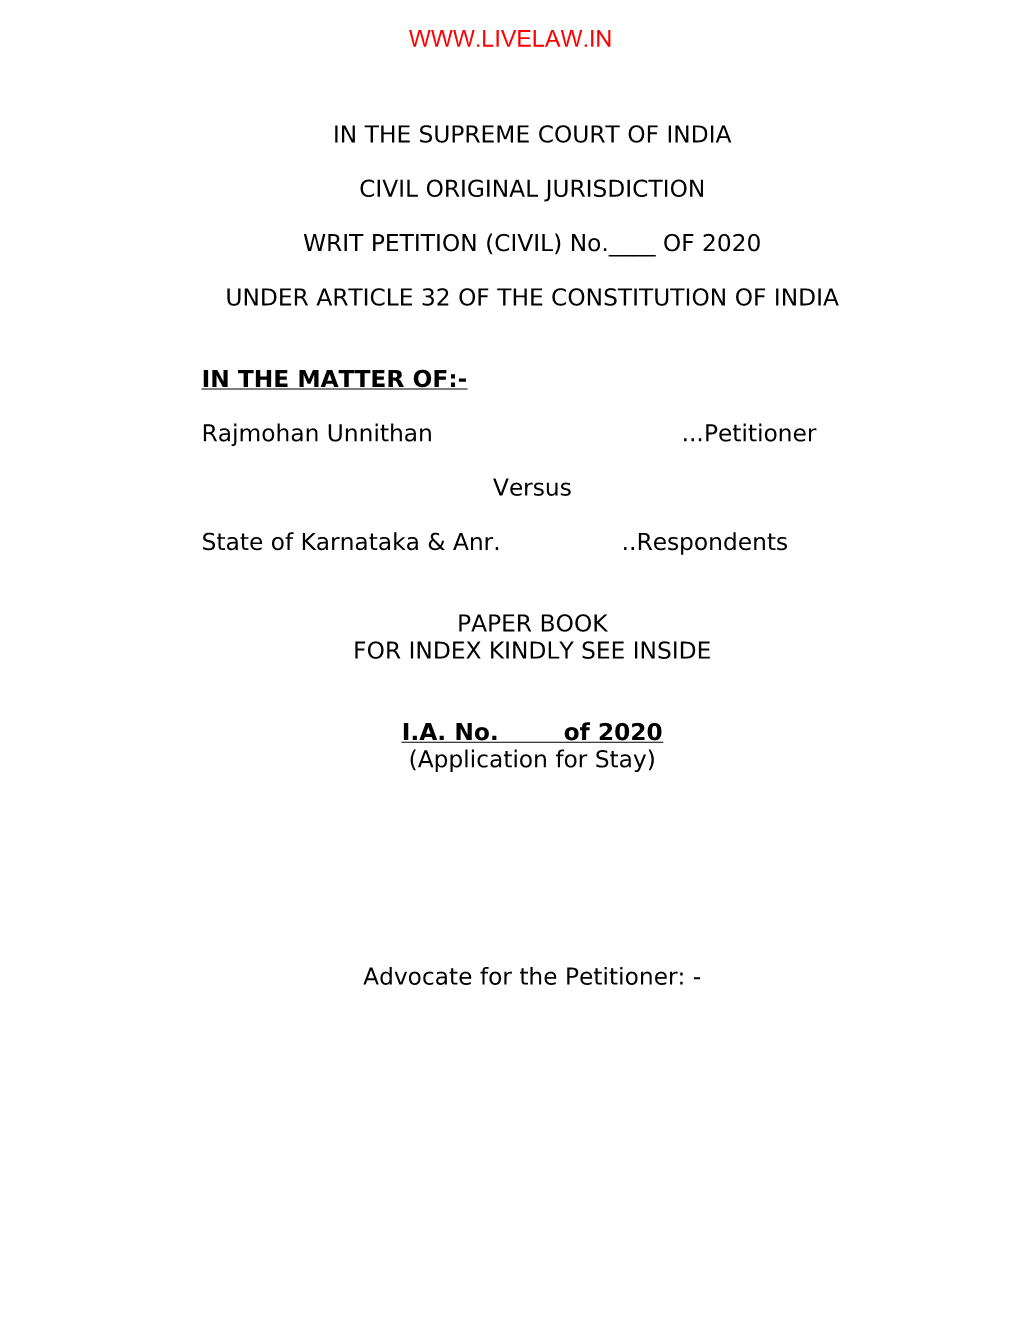 In the Supreme Court of India Civil Original